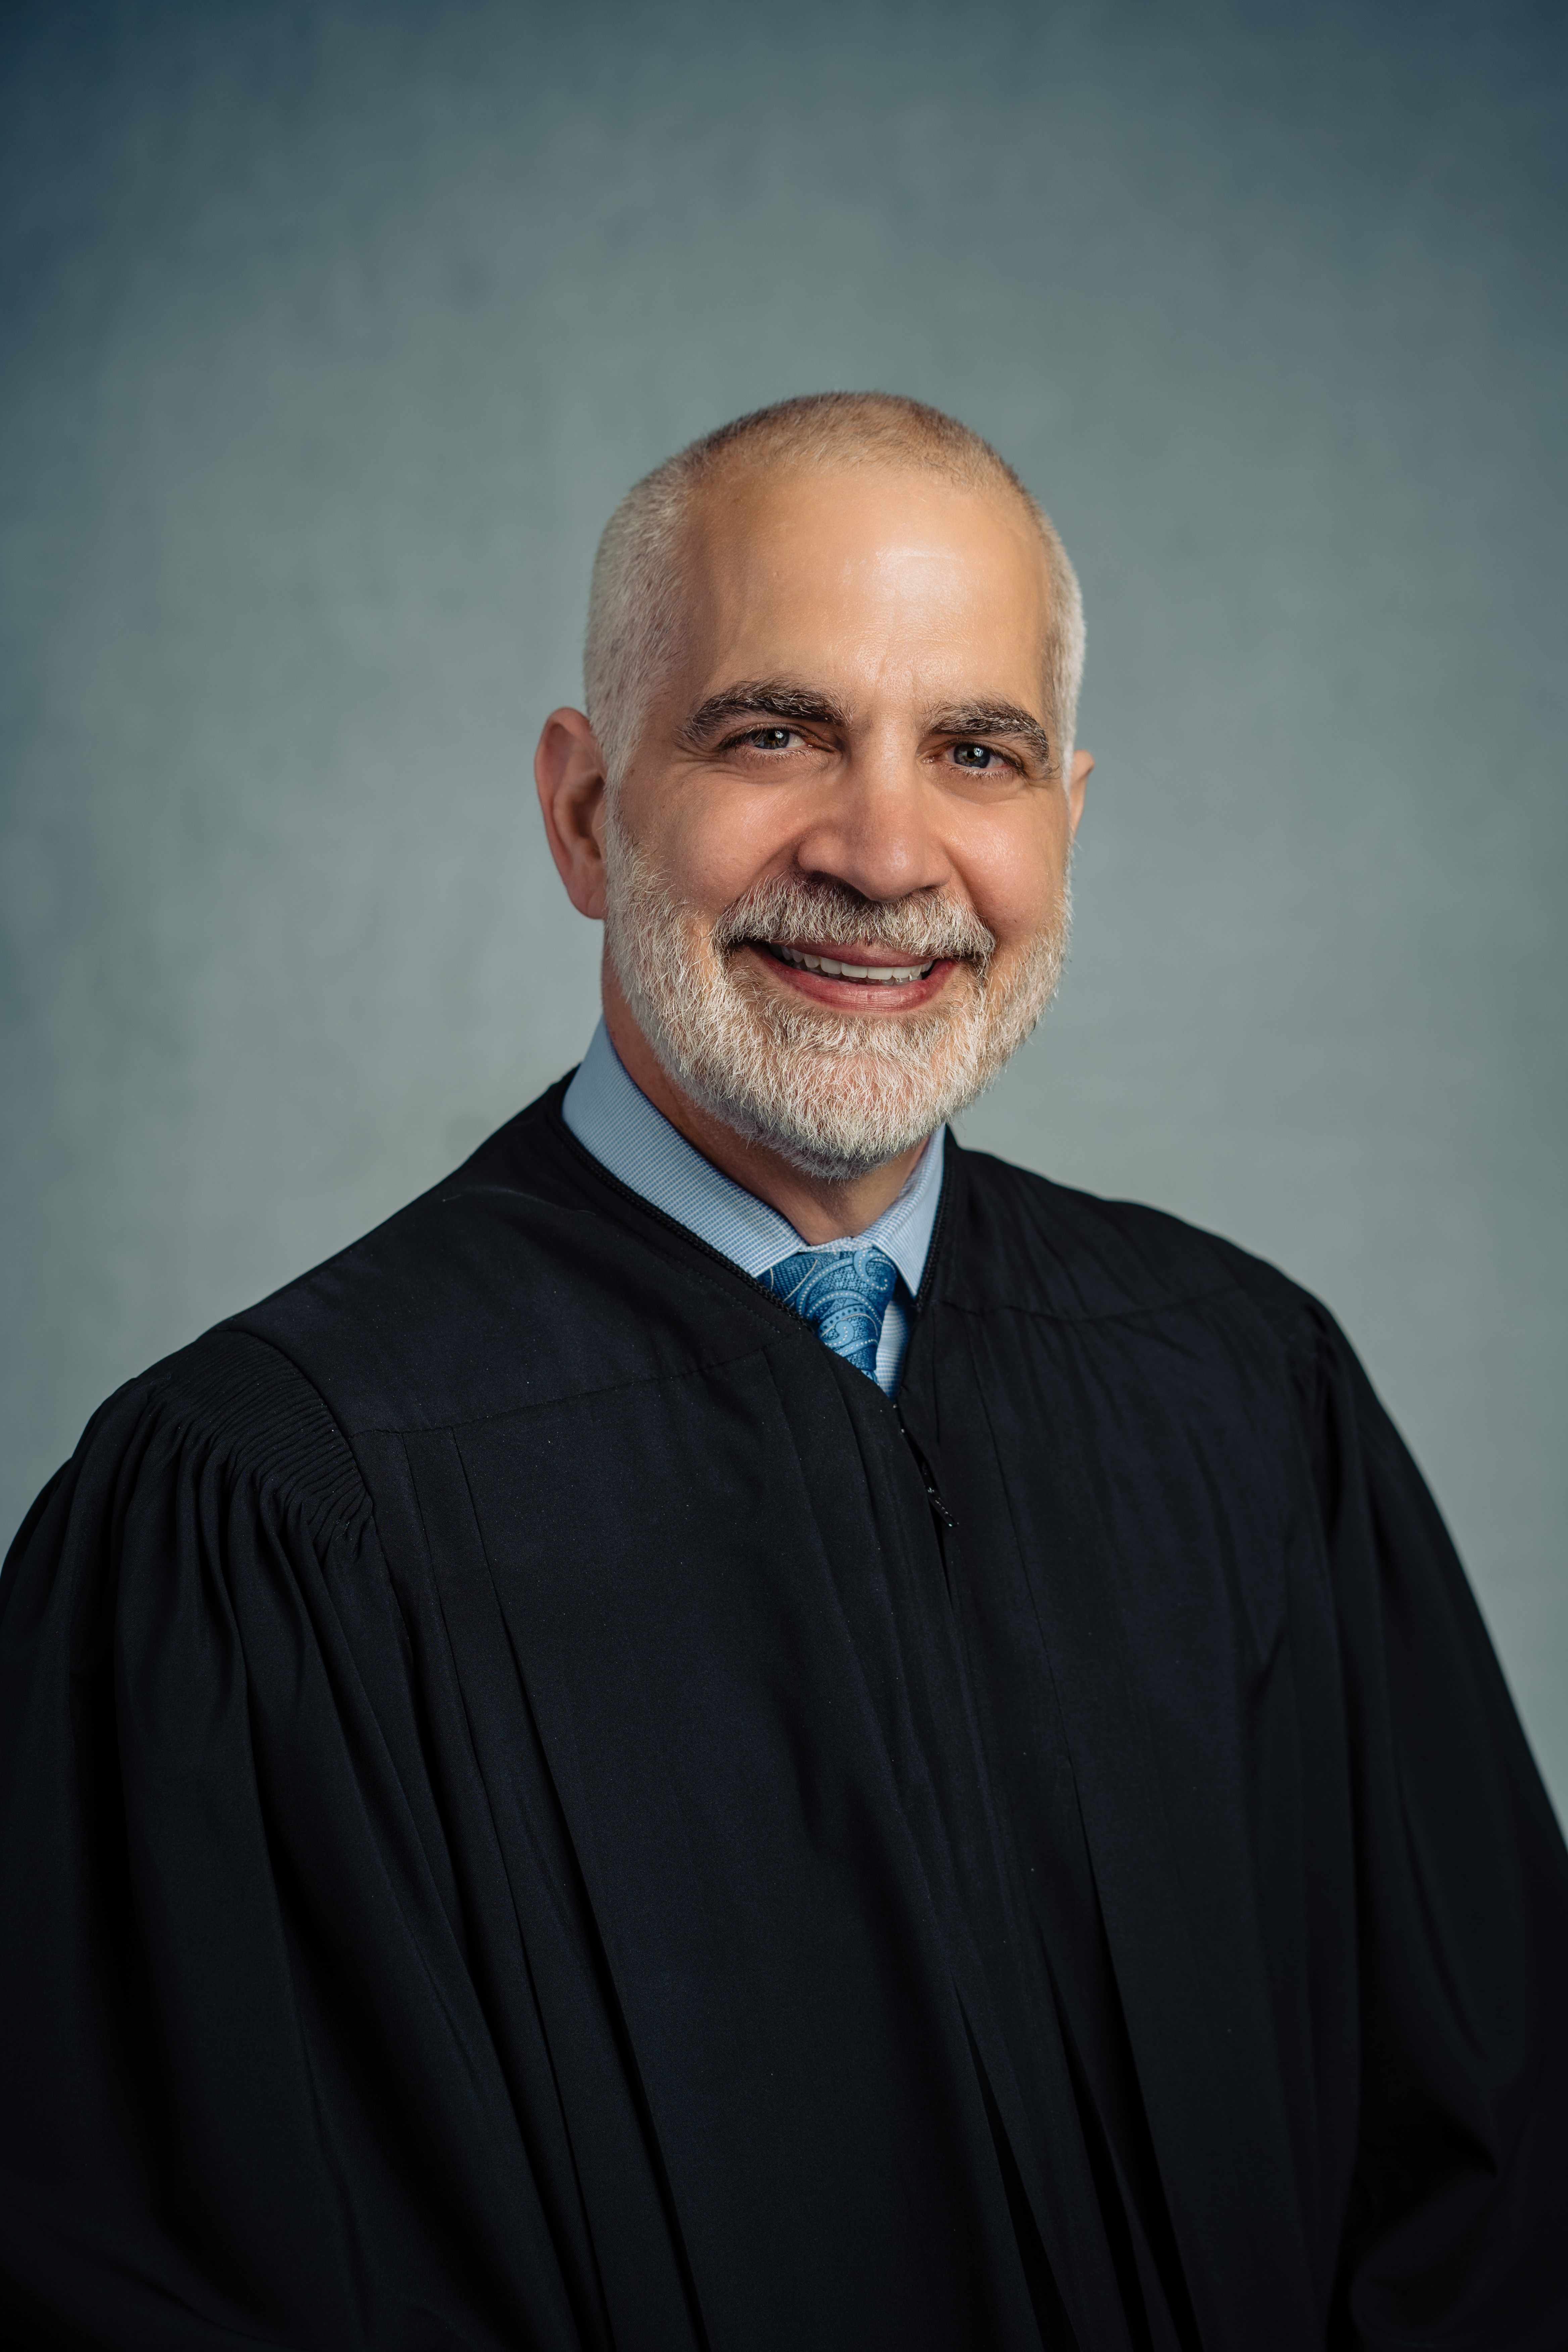 Judge Damon Shadid